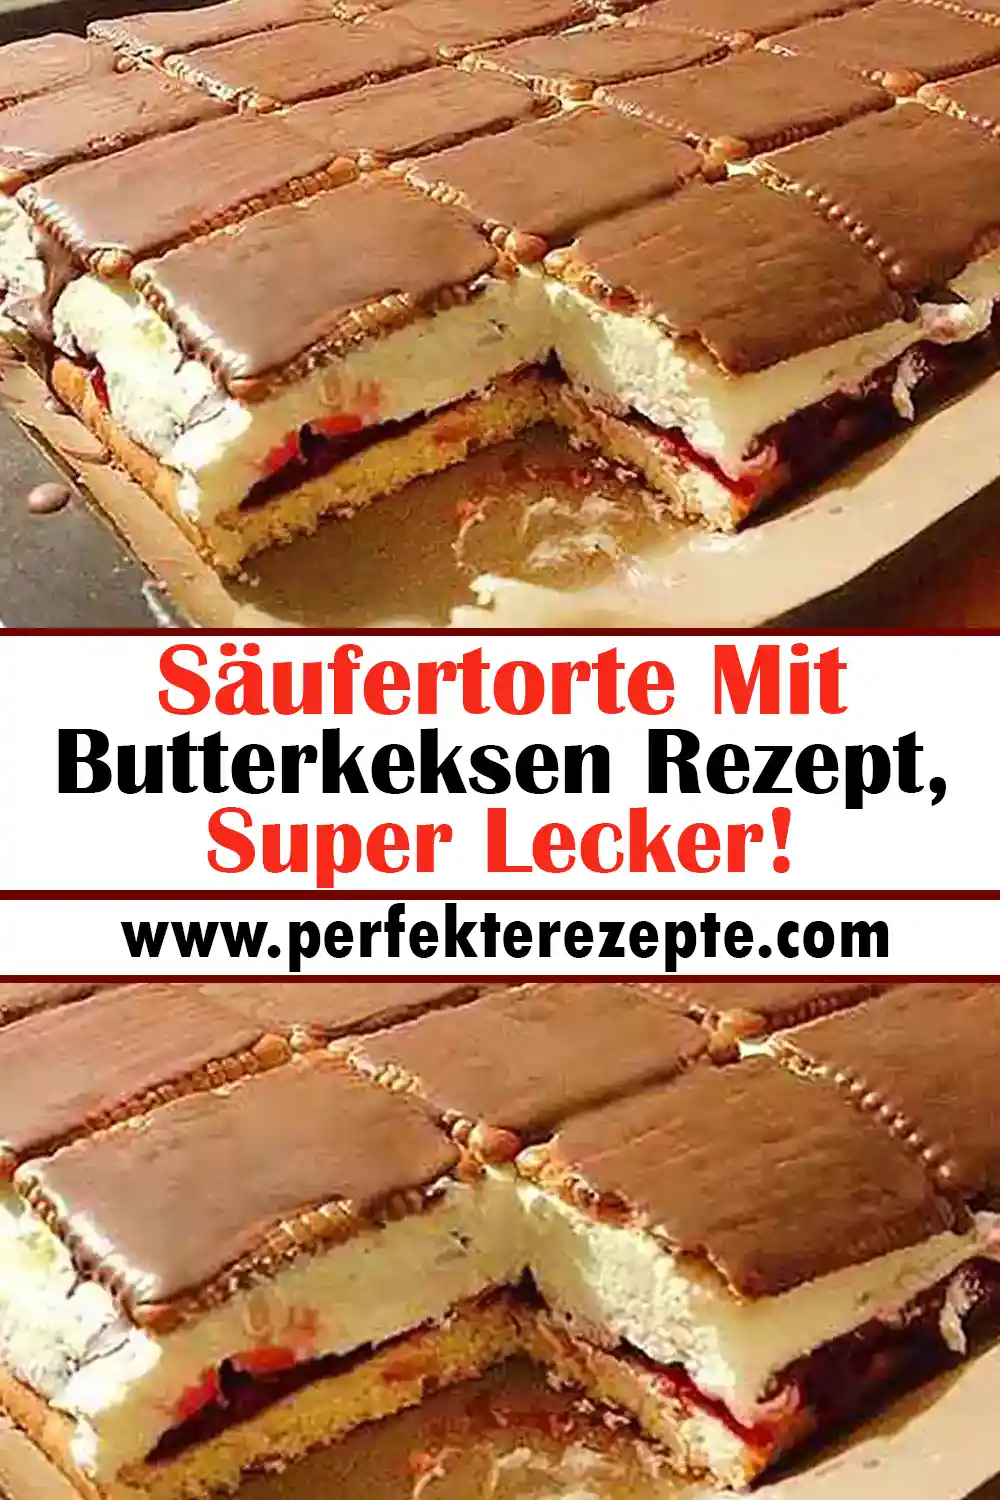 Säufertorte Mit Butterkeksen Rezept, Super Lecker!